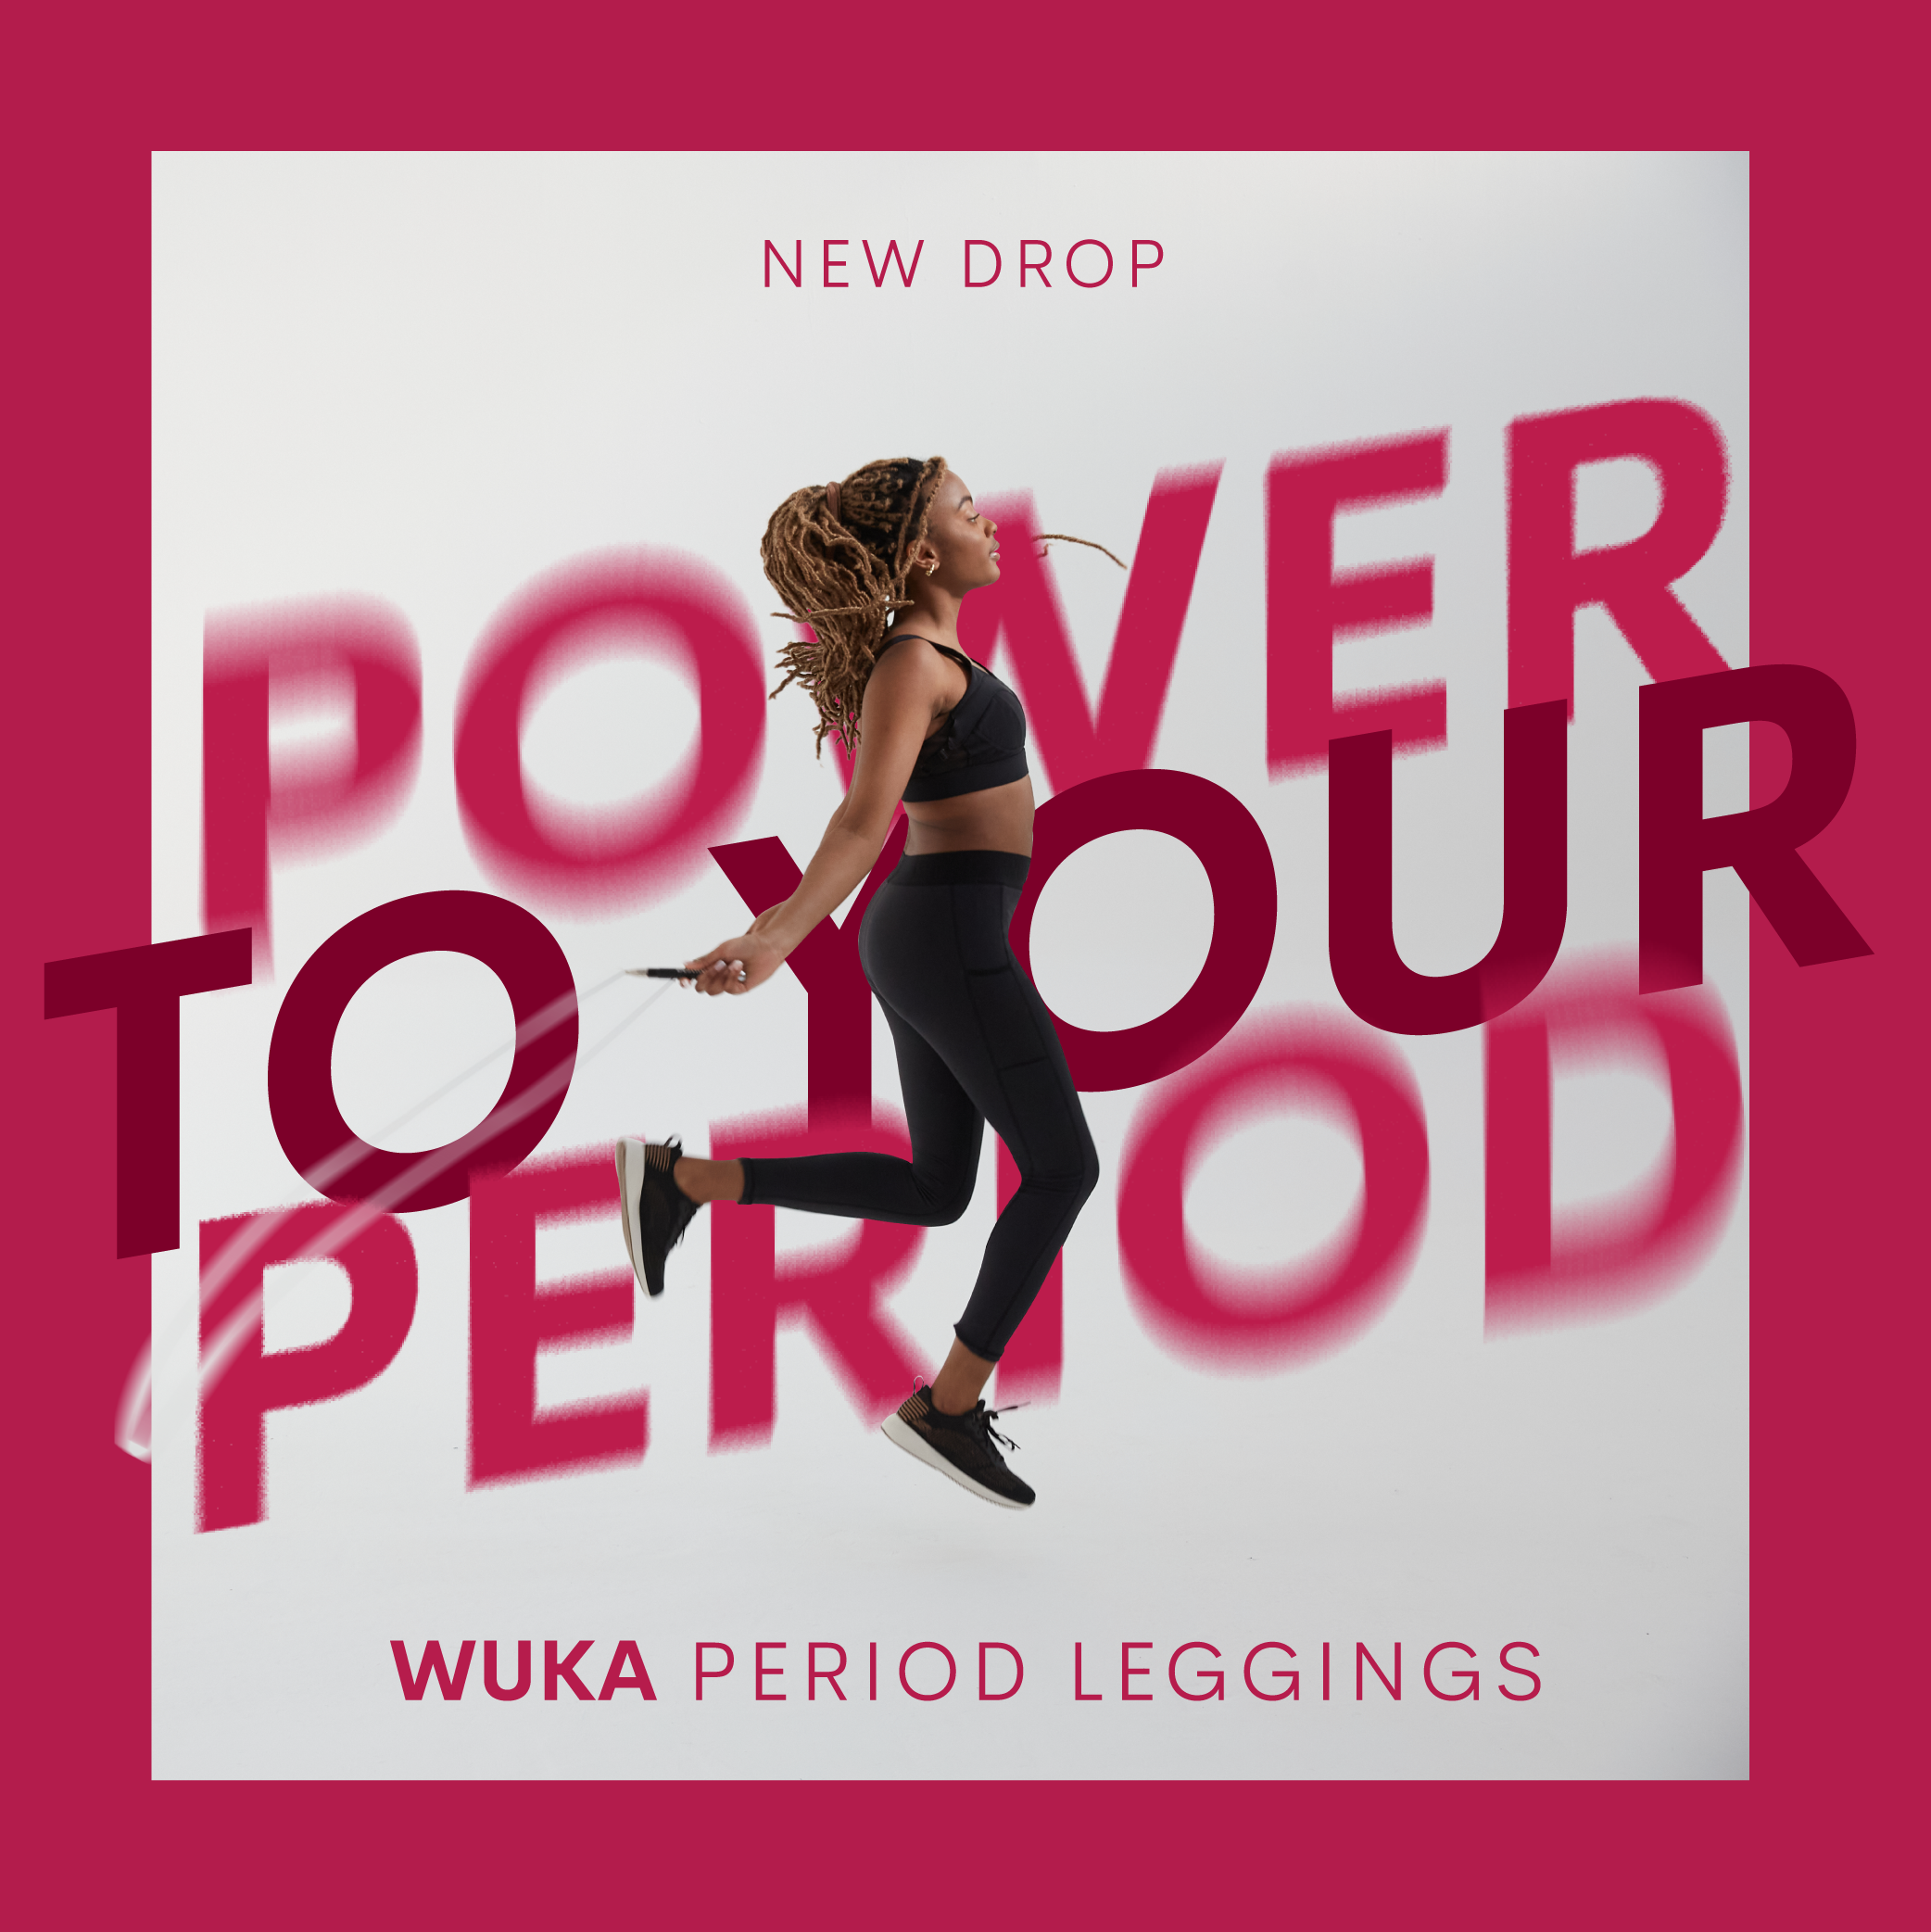 WUKA Period Leggings - how do they work?